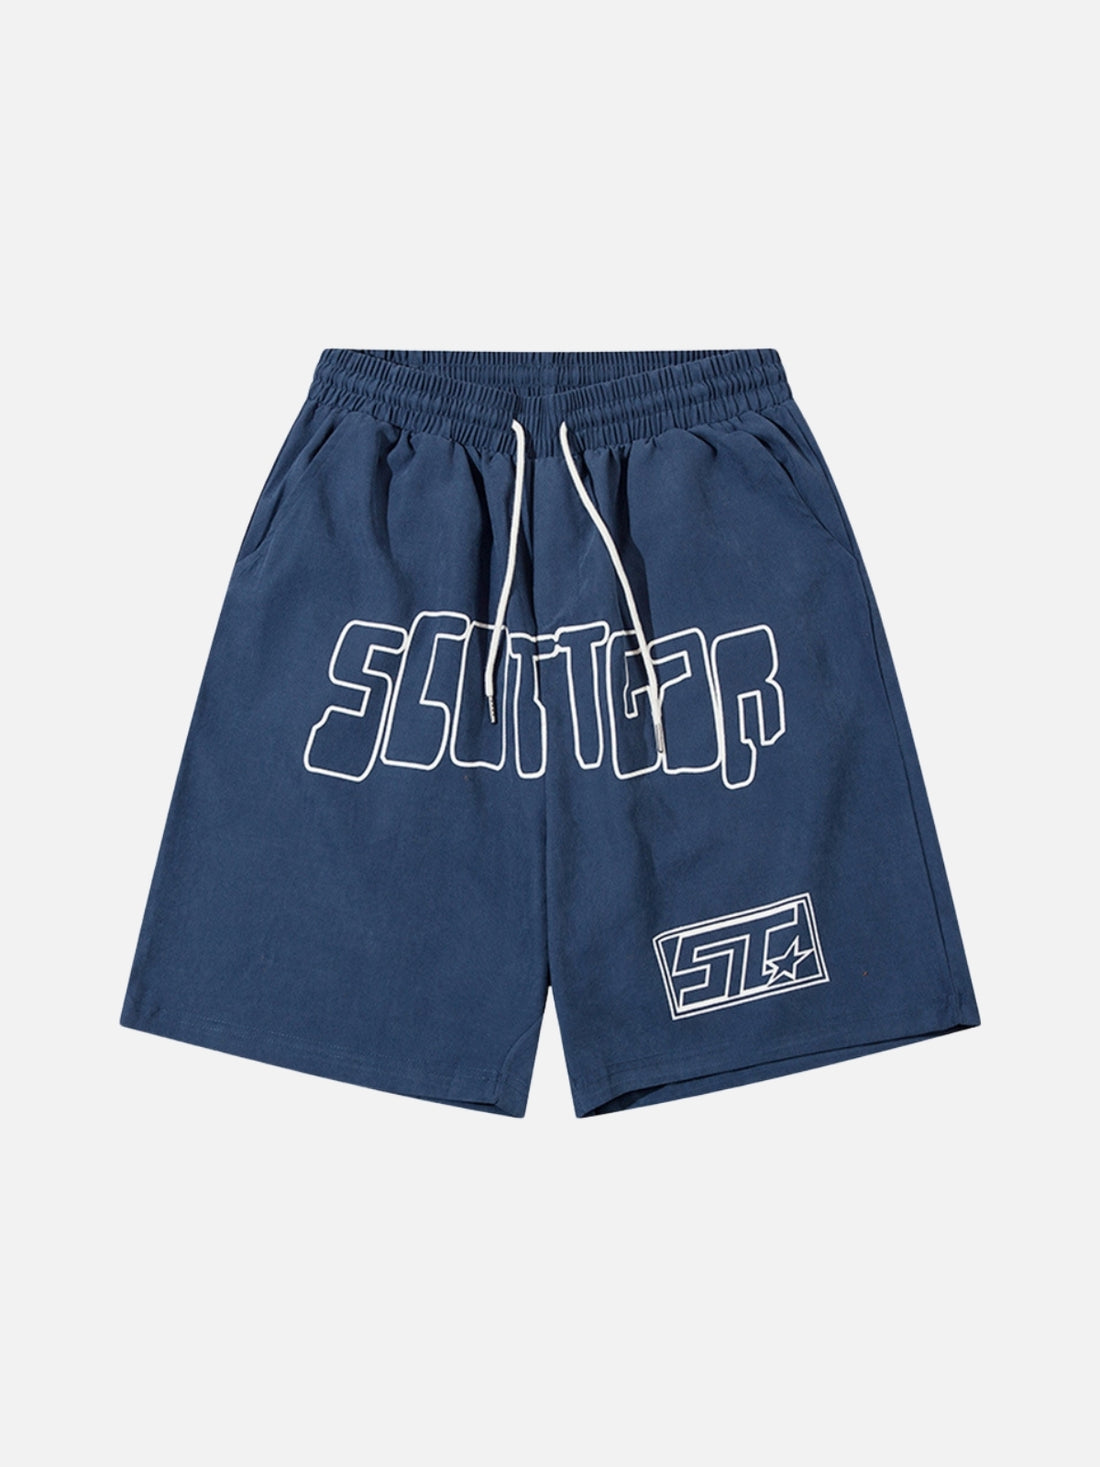 SCUTTGAR - Loose Cotton Graphic Shorts Blue | Teenwear.eu